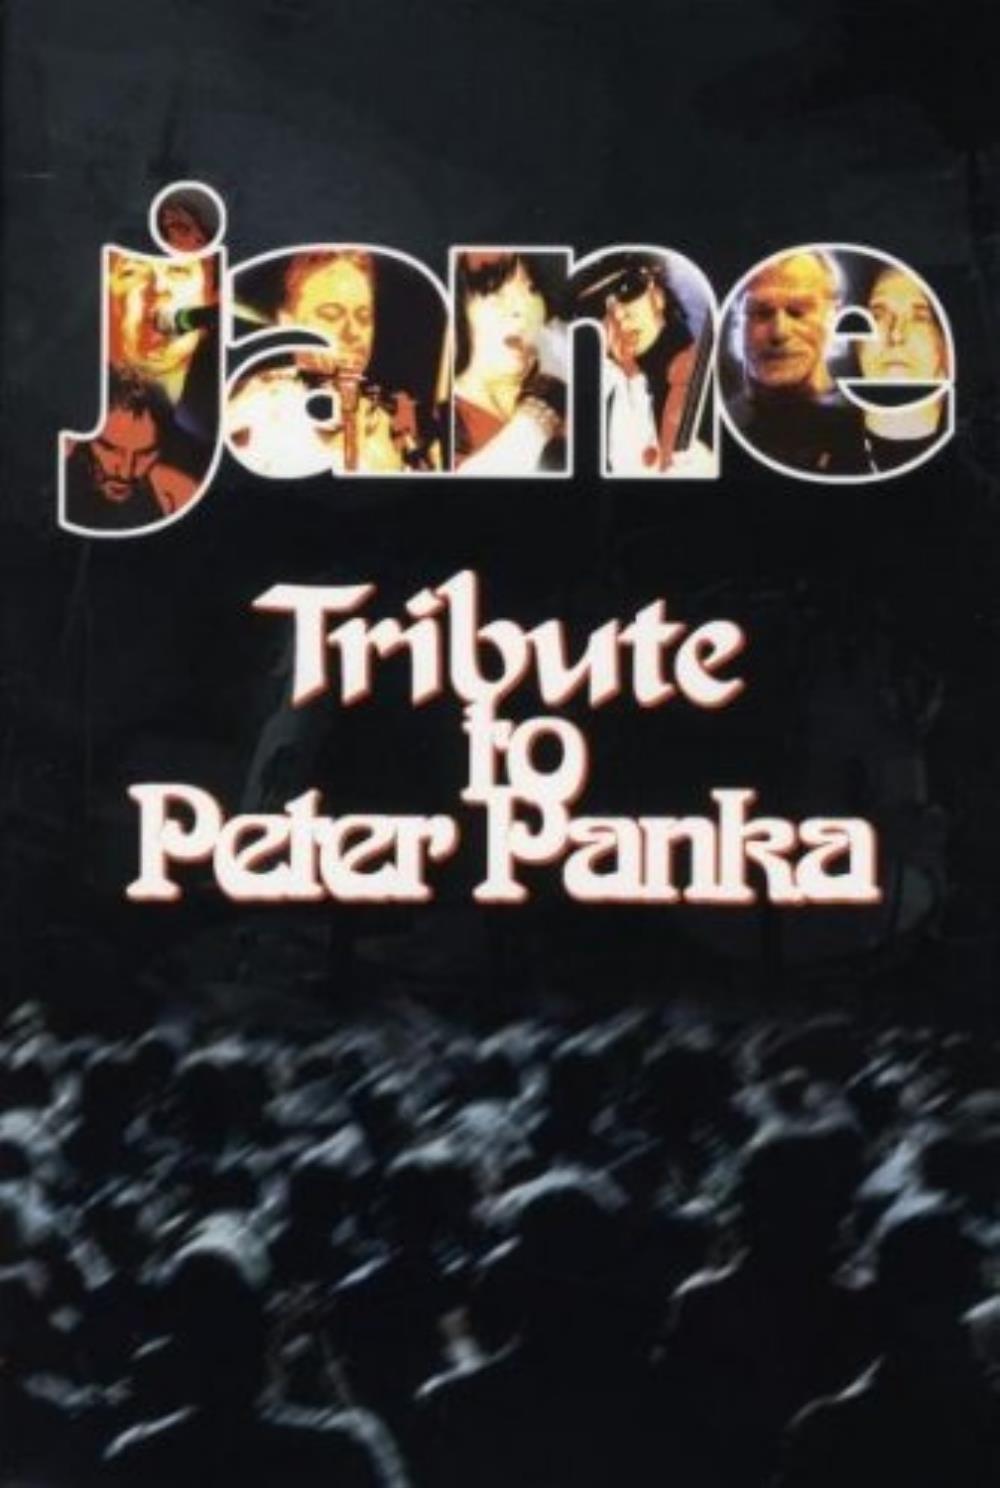 Jane Tribute To Peter Panka album cover